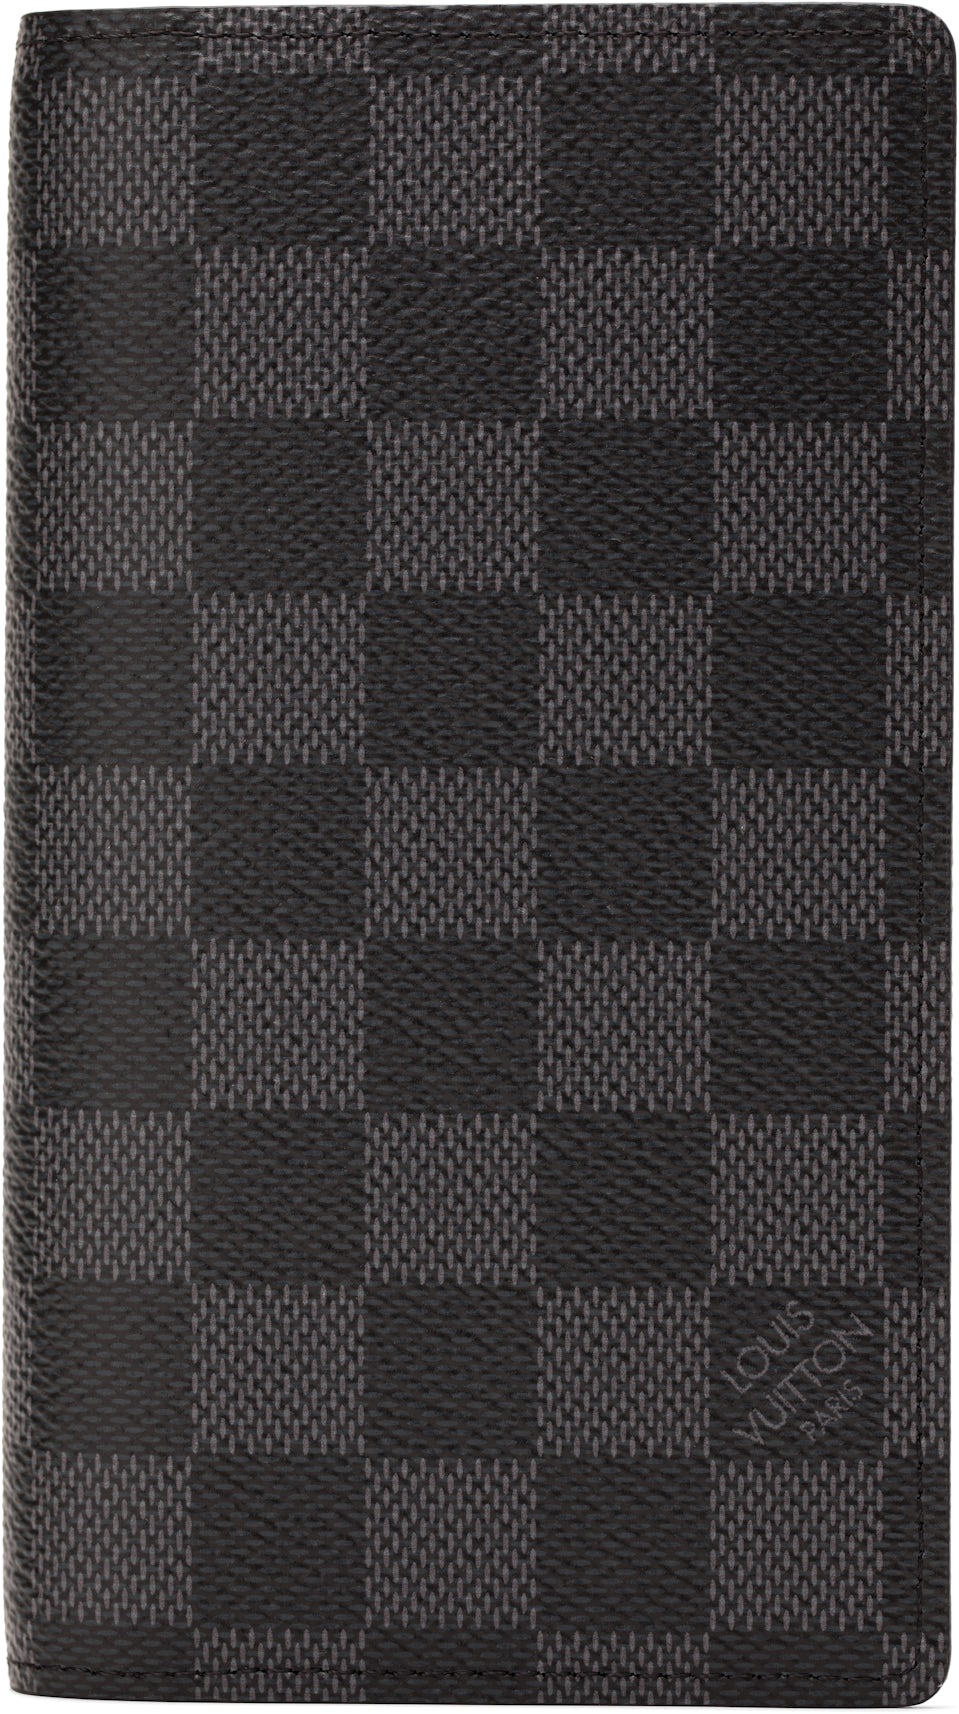 Louis Vuitton Passport Cover Damier Graphite Black/Gray